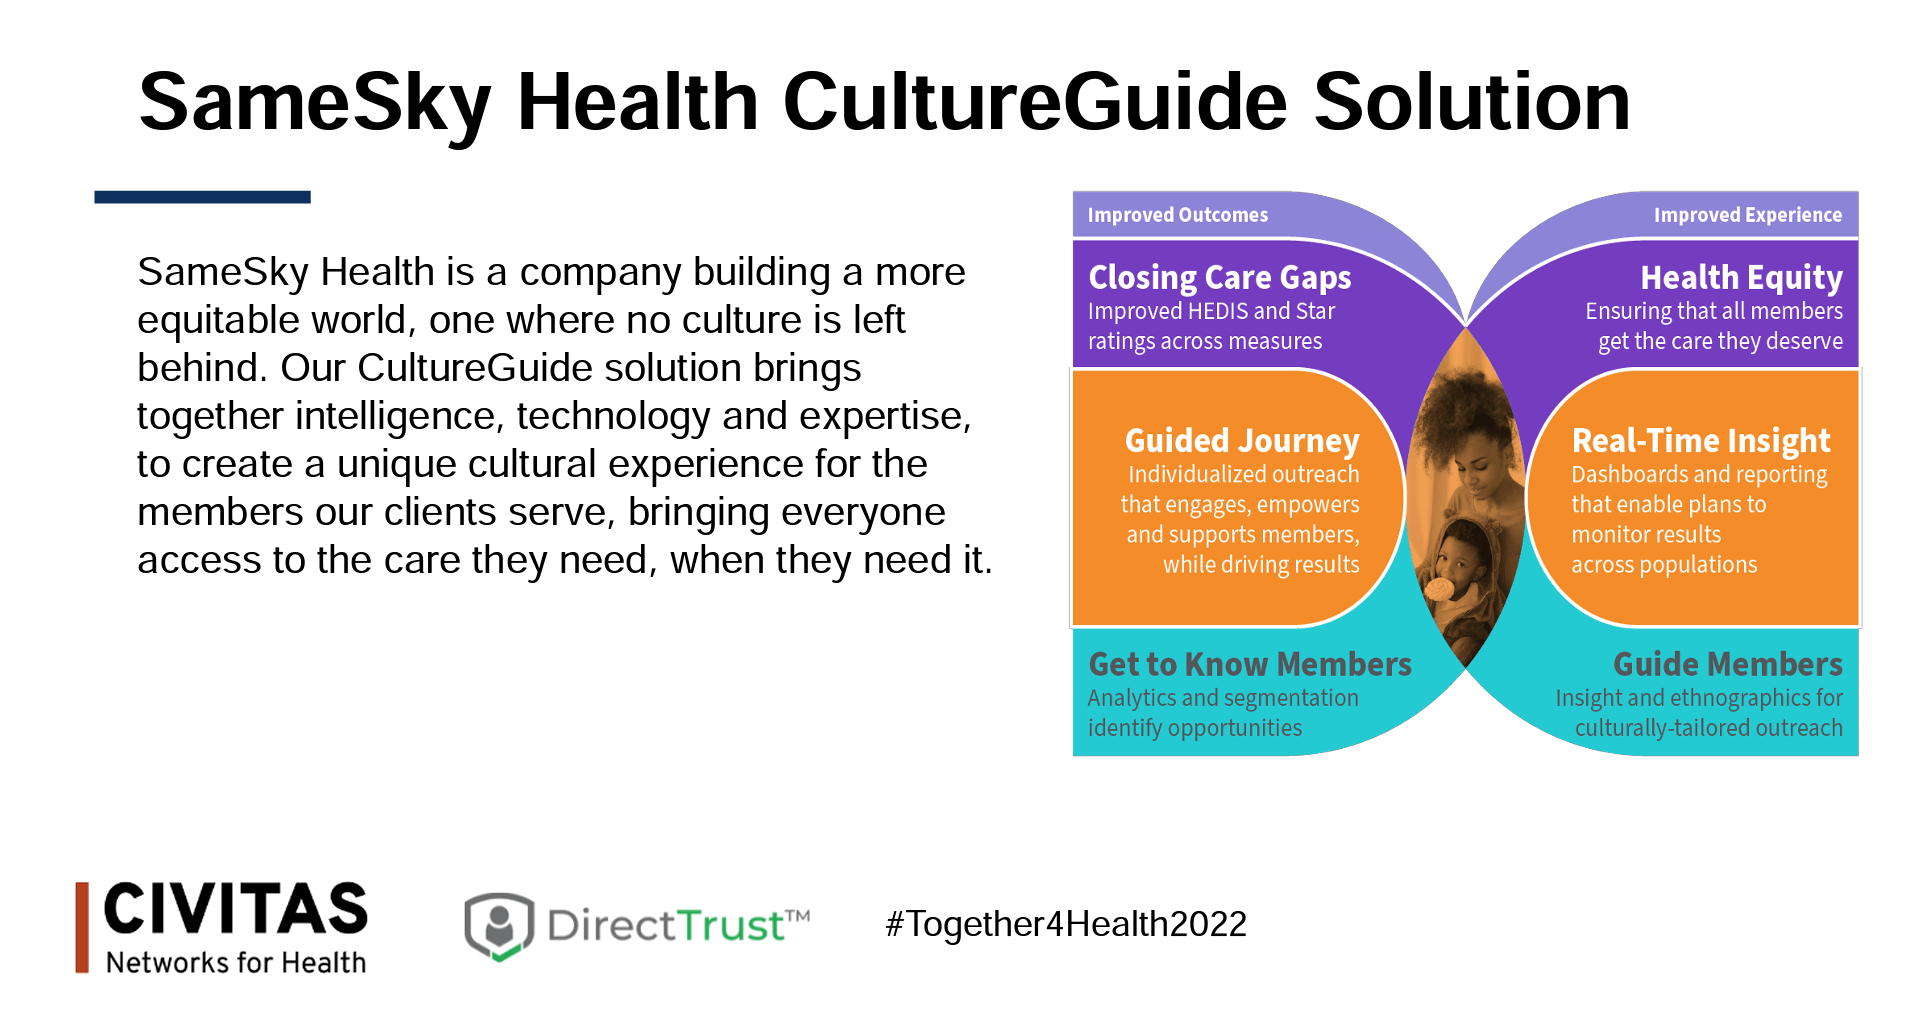 SameSky Health CultureGuide Solution